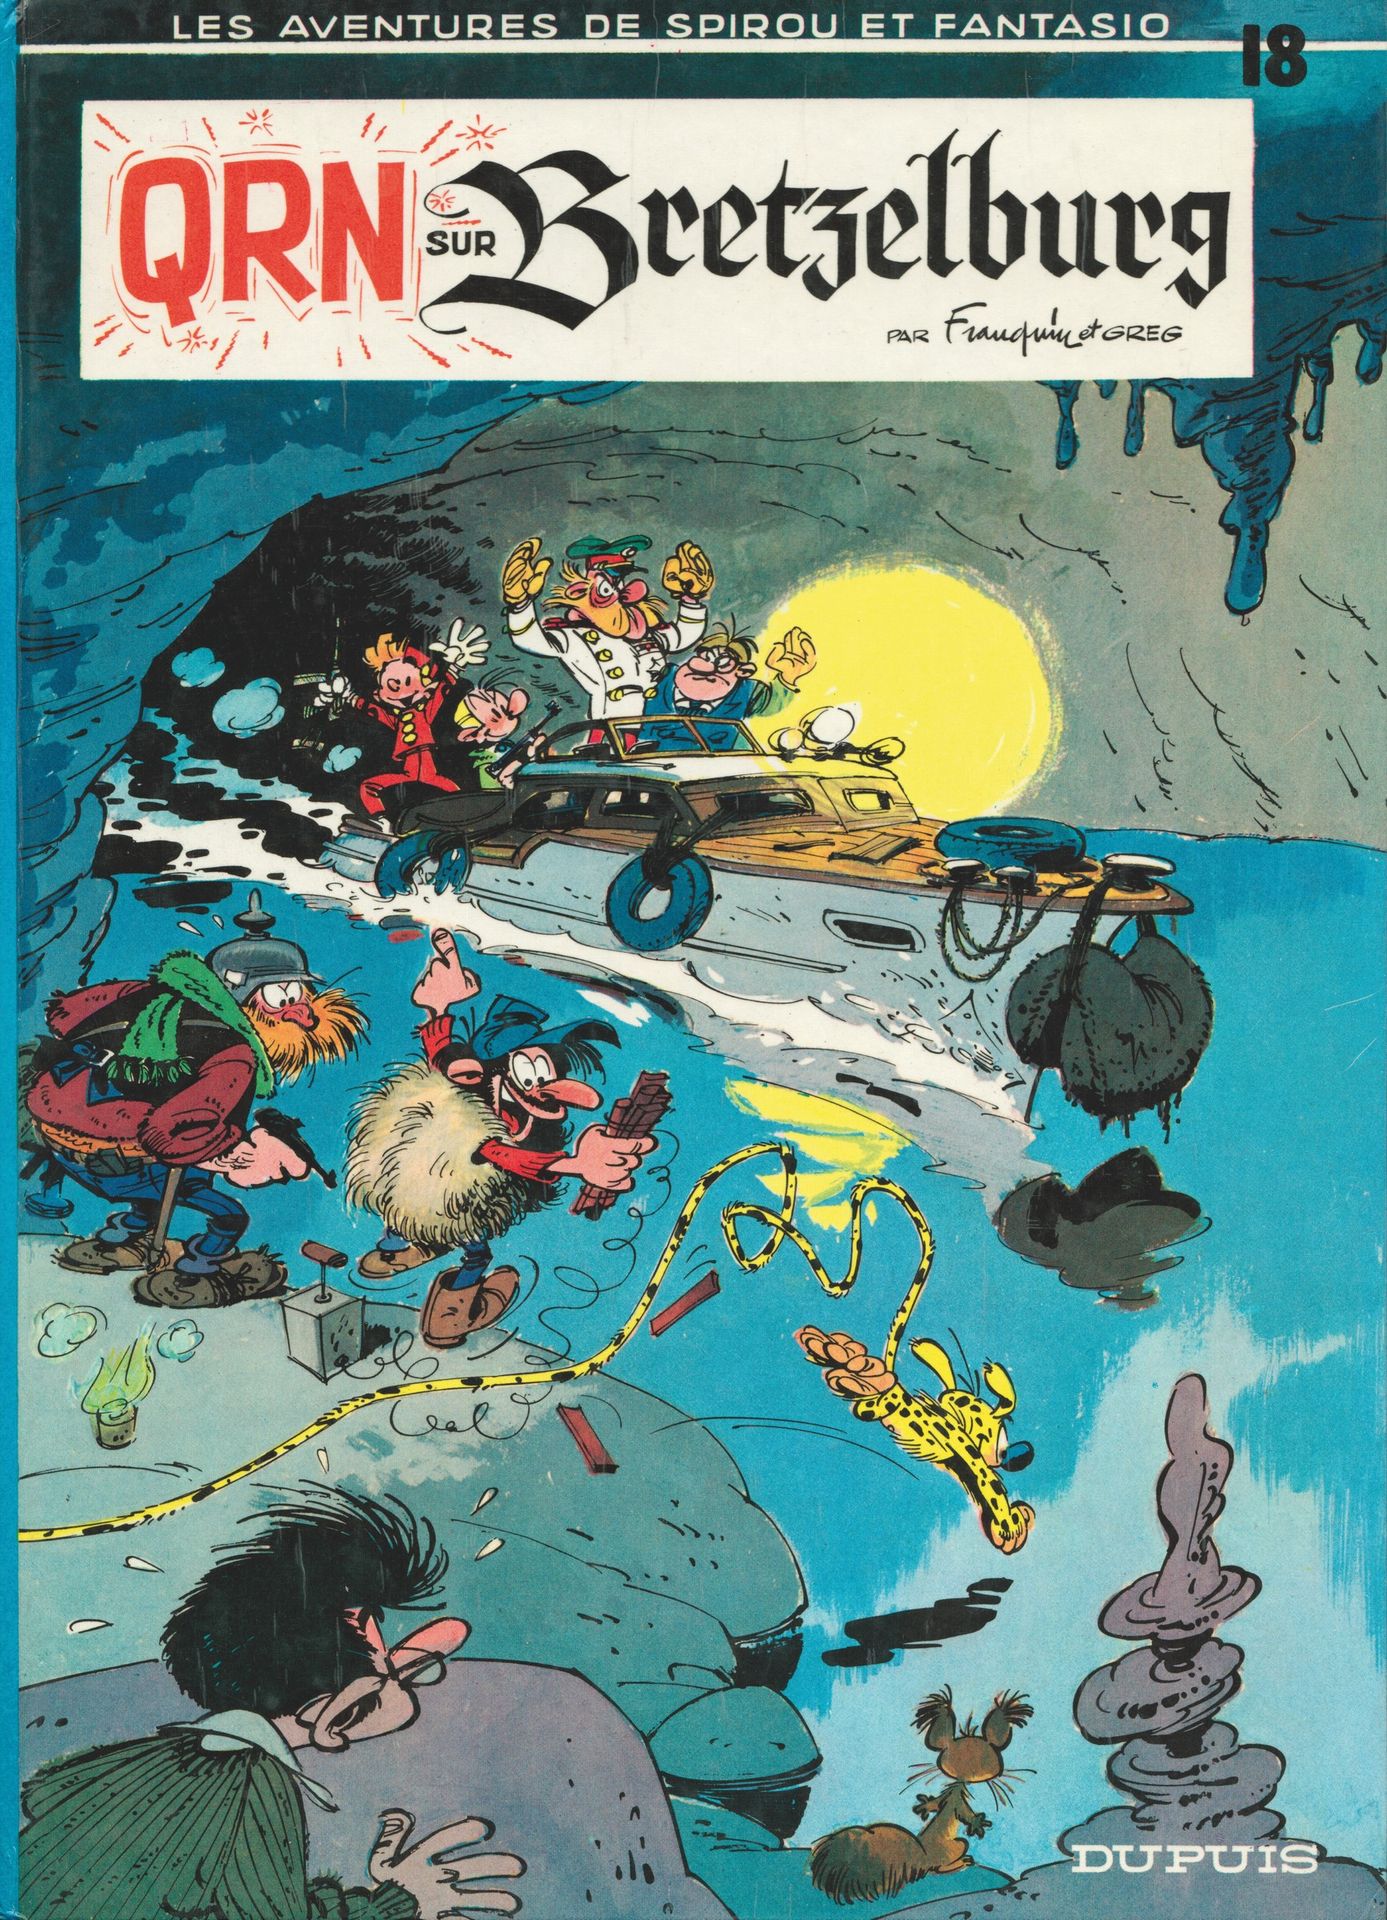 FRANQUIN Spirou et Fantasio. Volume 18: QRN sur Bretzelburg. Eo de 1966 (Dupuis)&hellip;